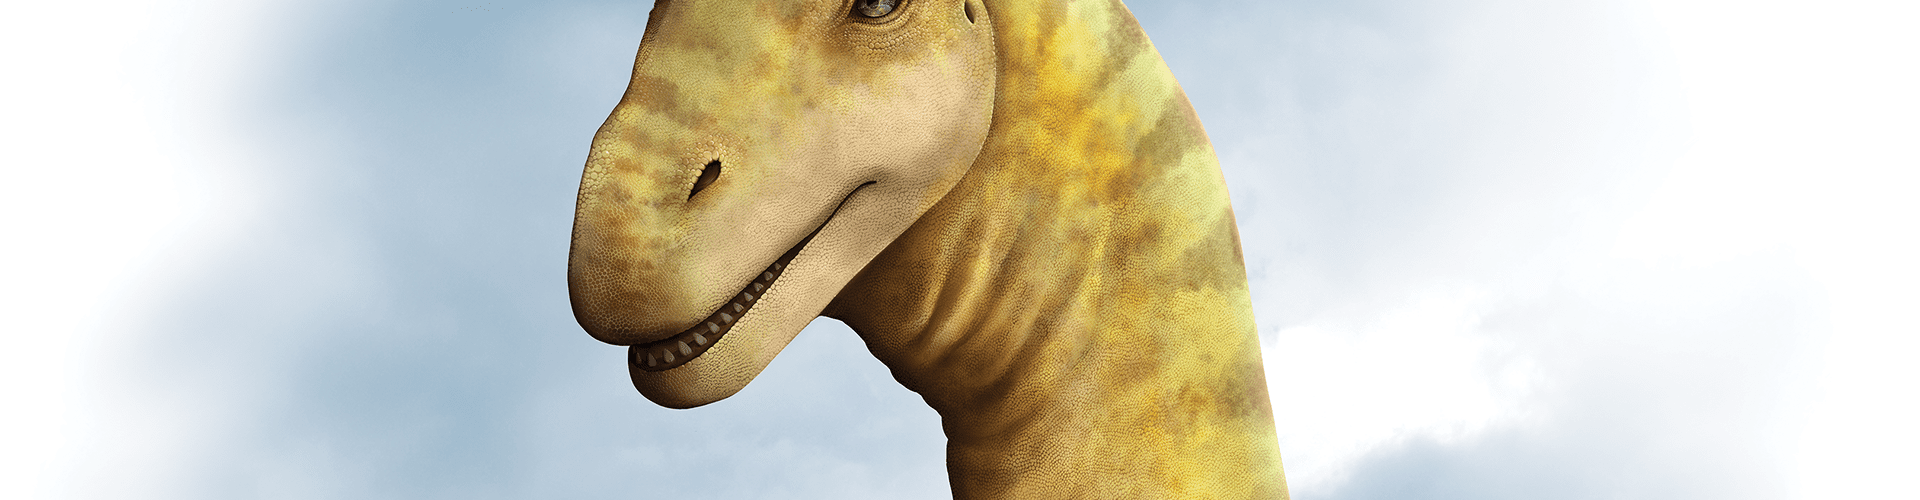 95-million-year-old sauropod dinosaur skull first of its kind in Australia